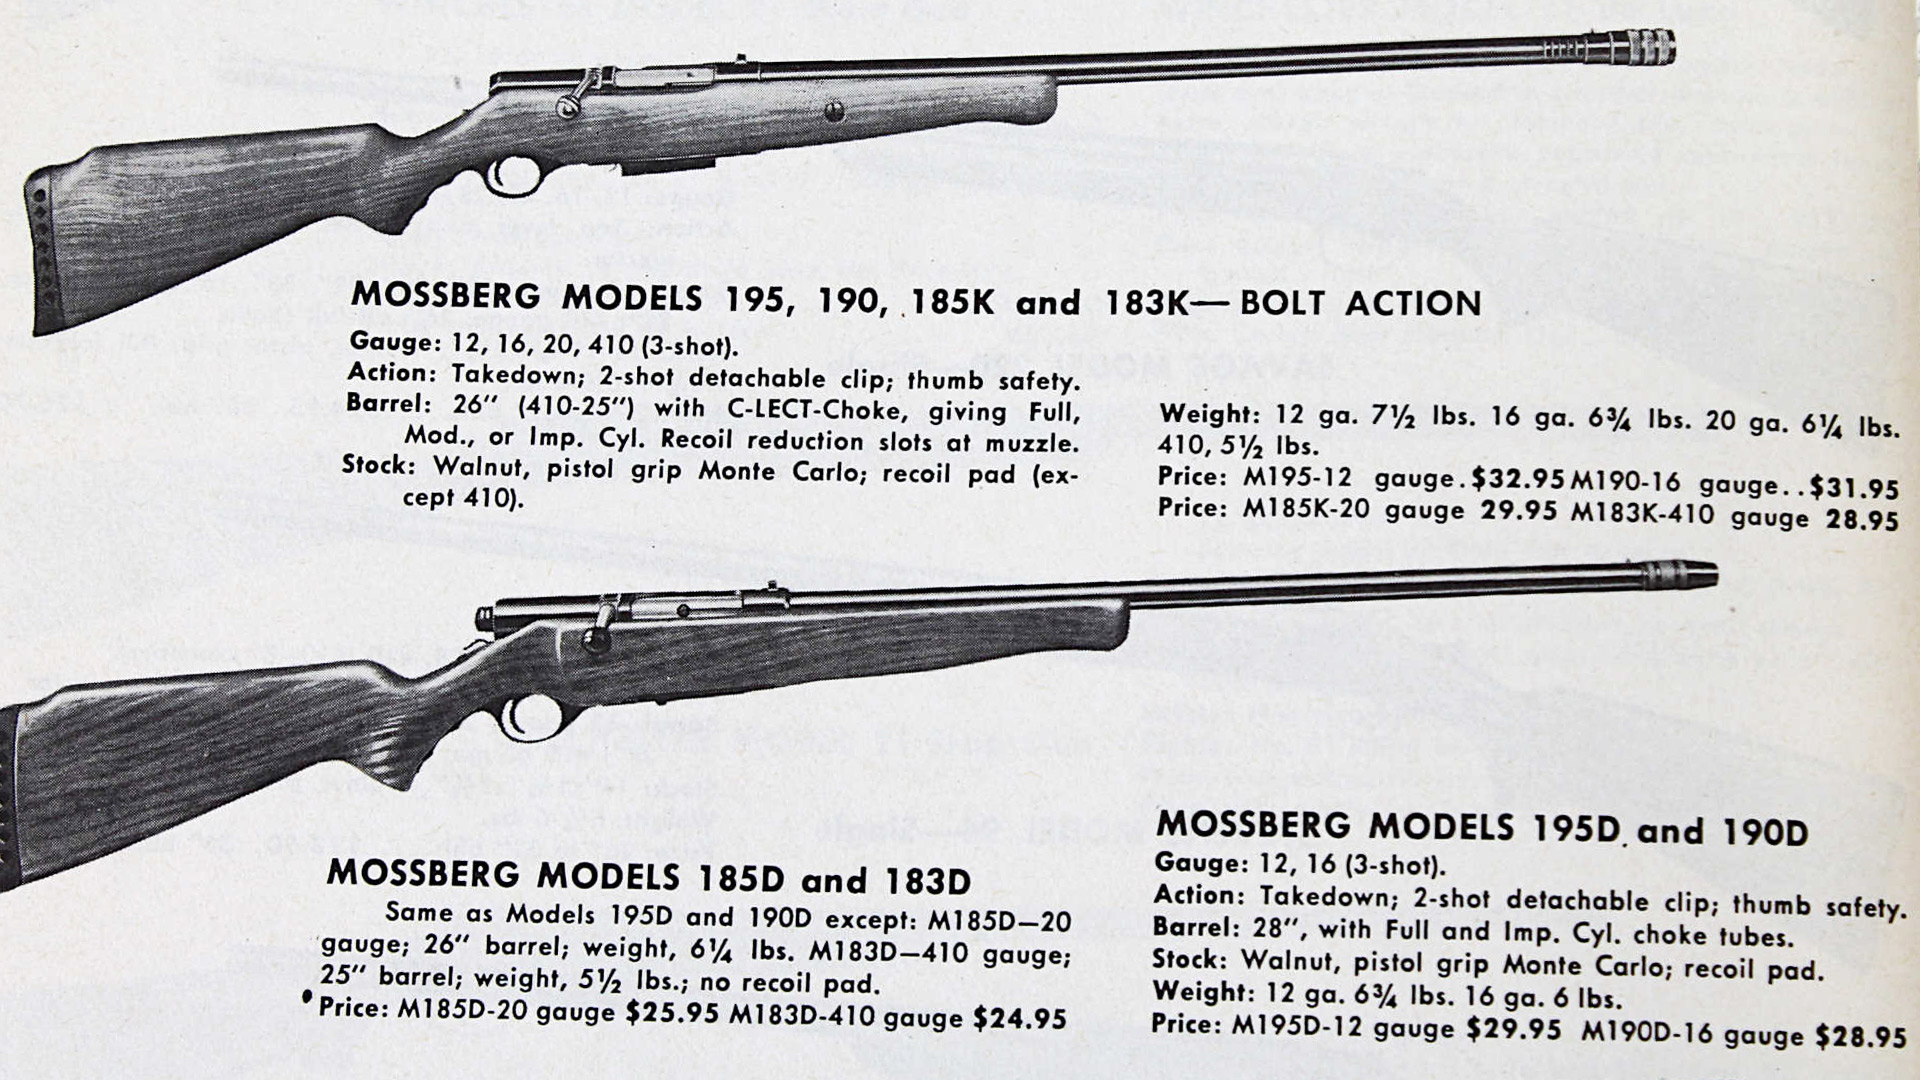 Gun Digest ads for Model 183 bolt-action shotgun